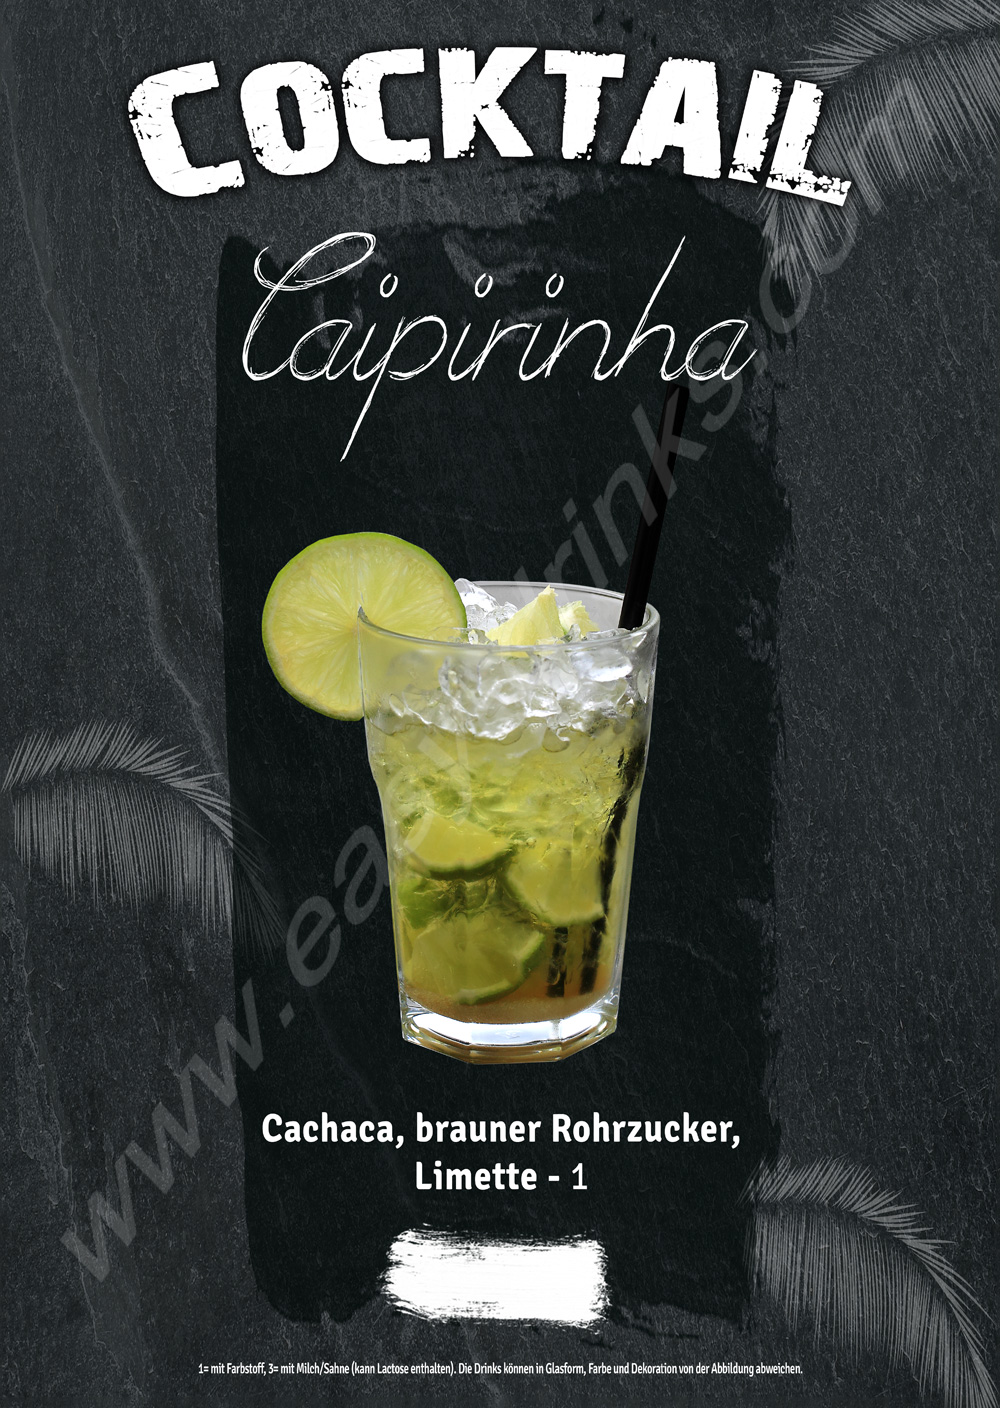 Caipirinha / Fertigcocktail / 32% Vol. 0,7 ltr. / easy drinks